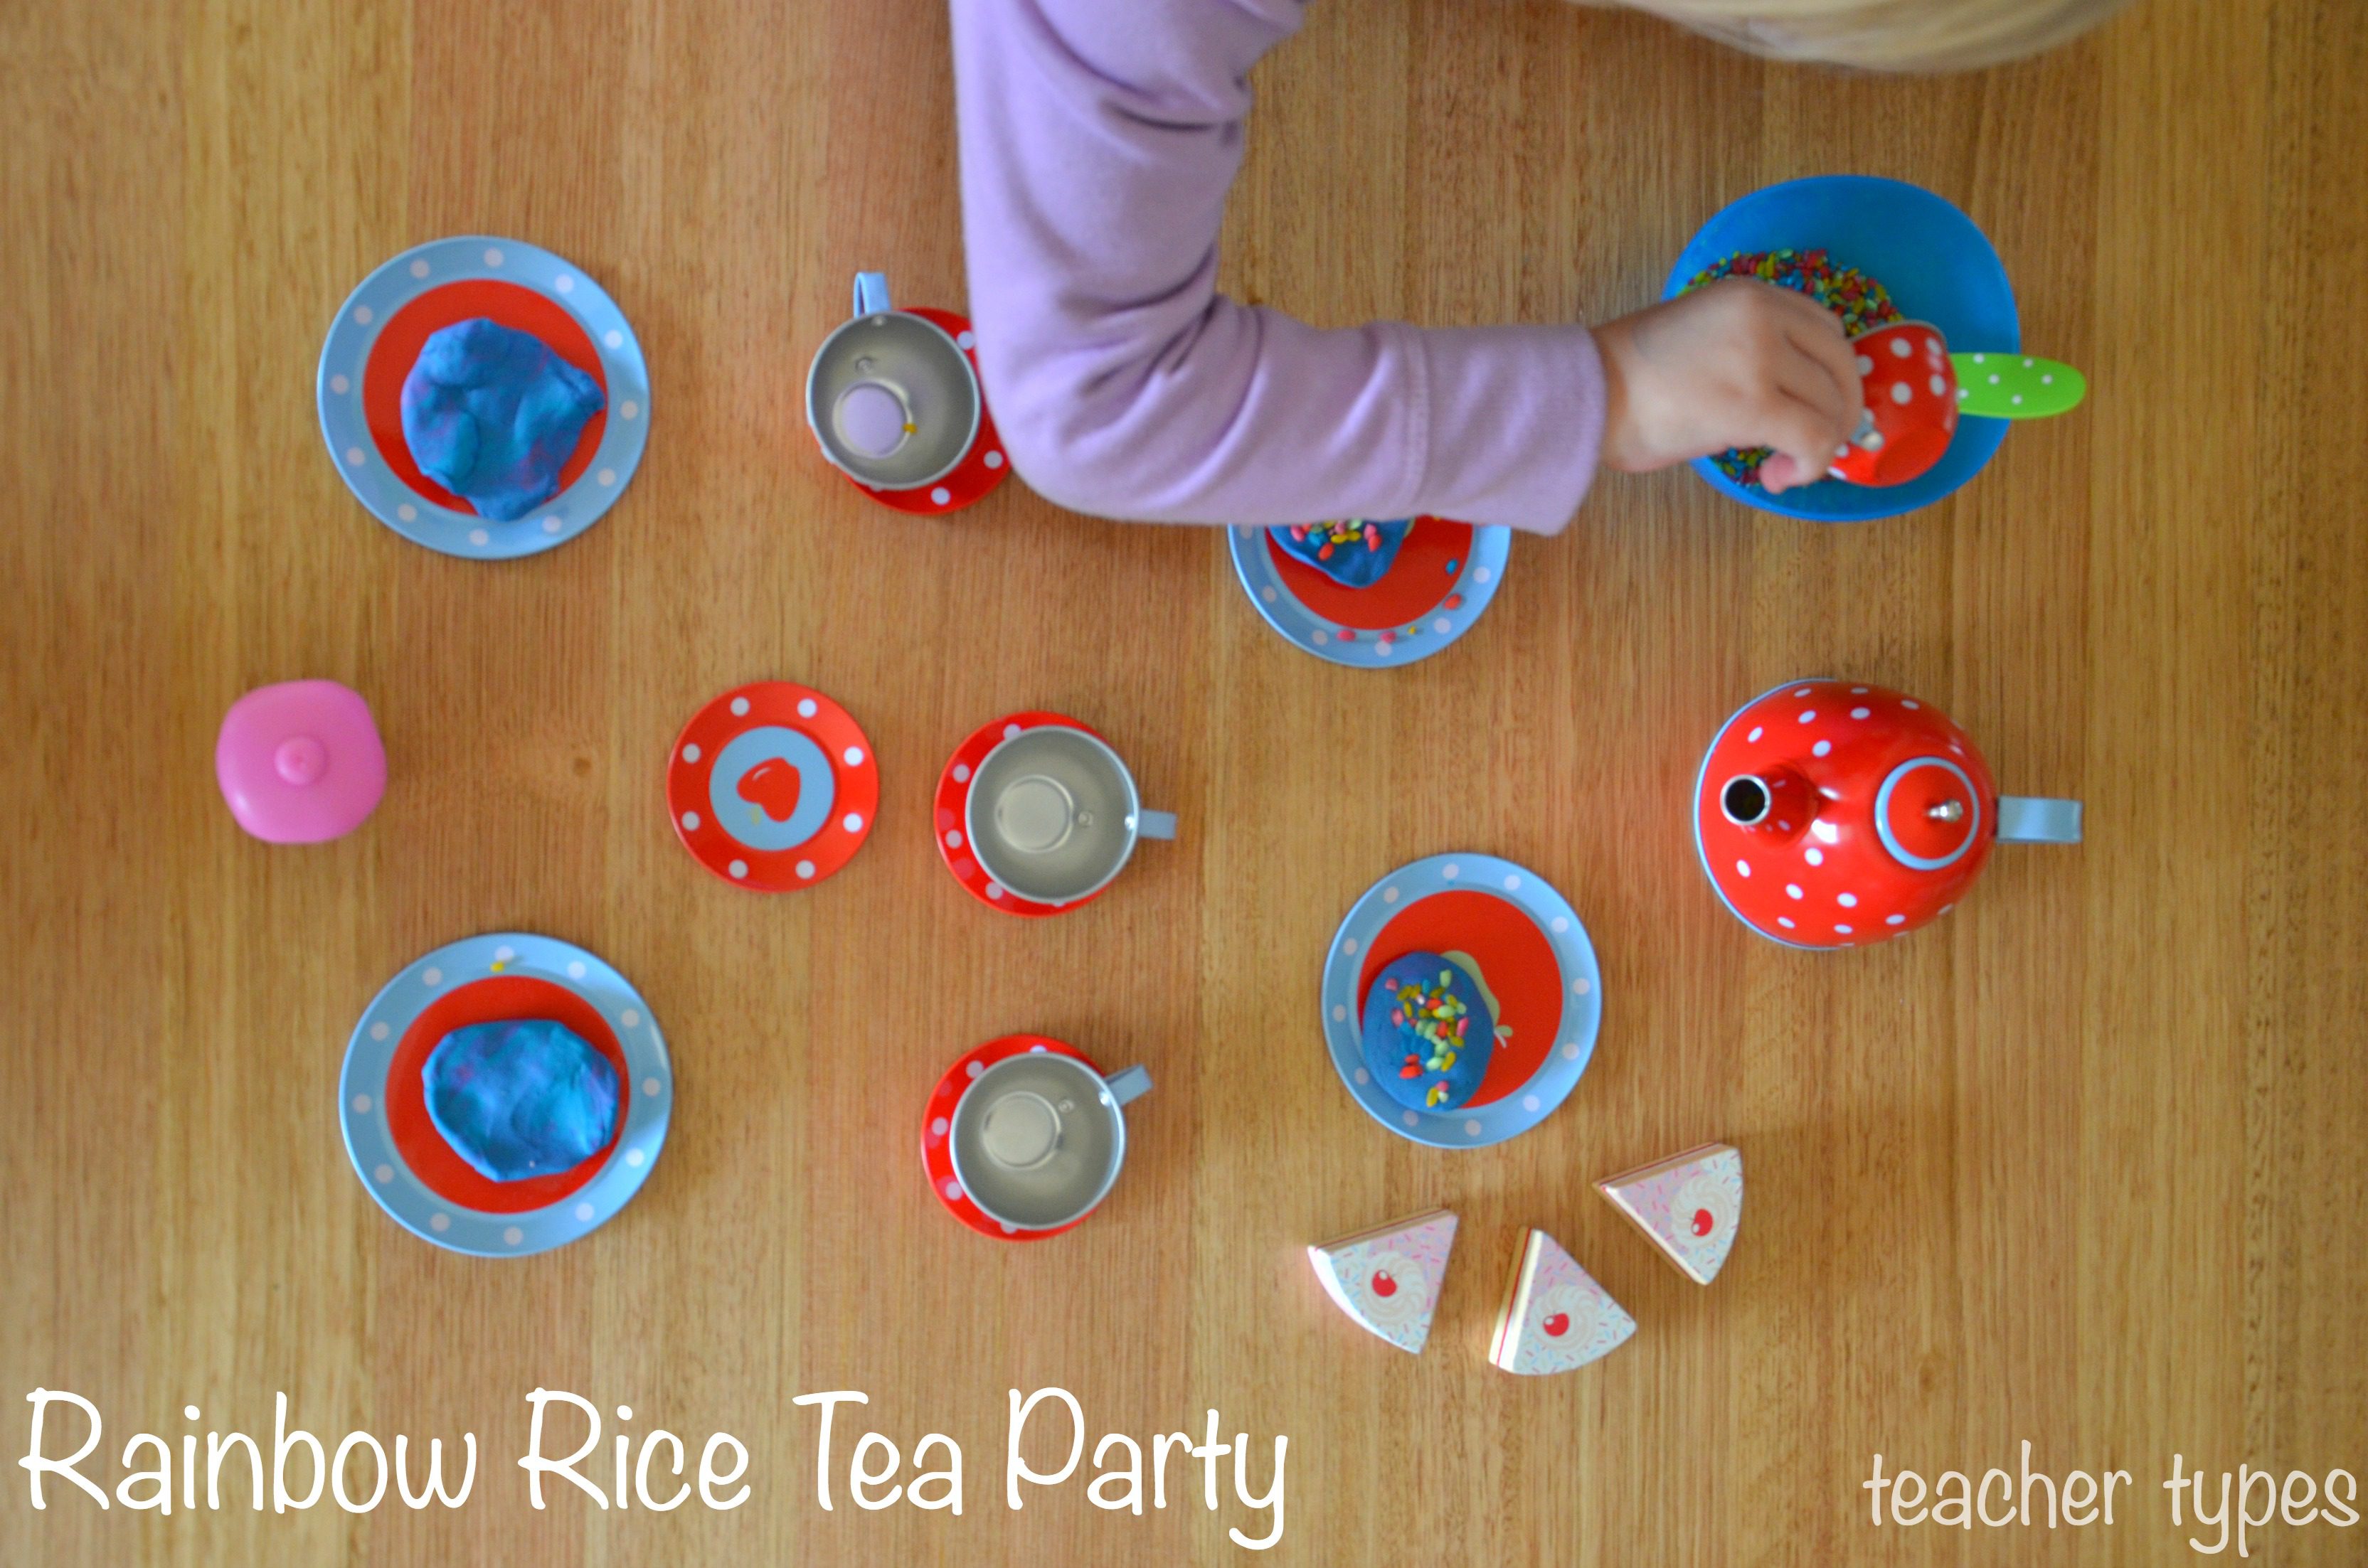 Rainbow Rice Tea Party